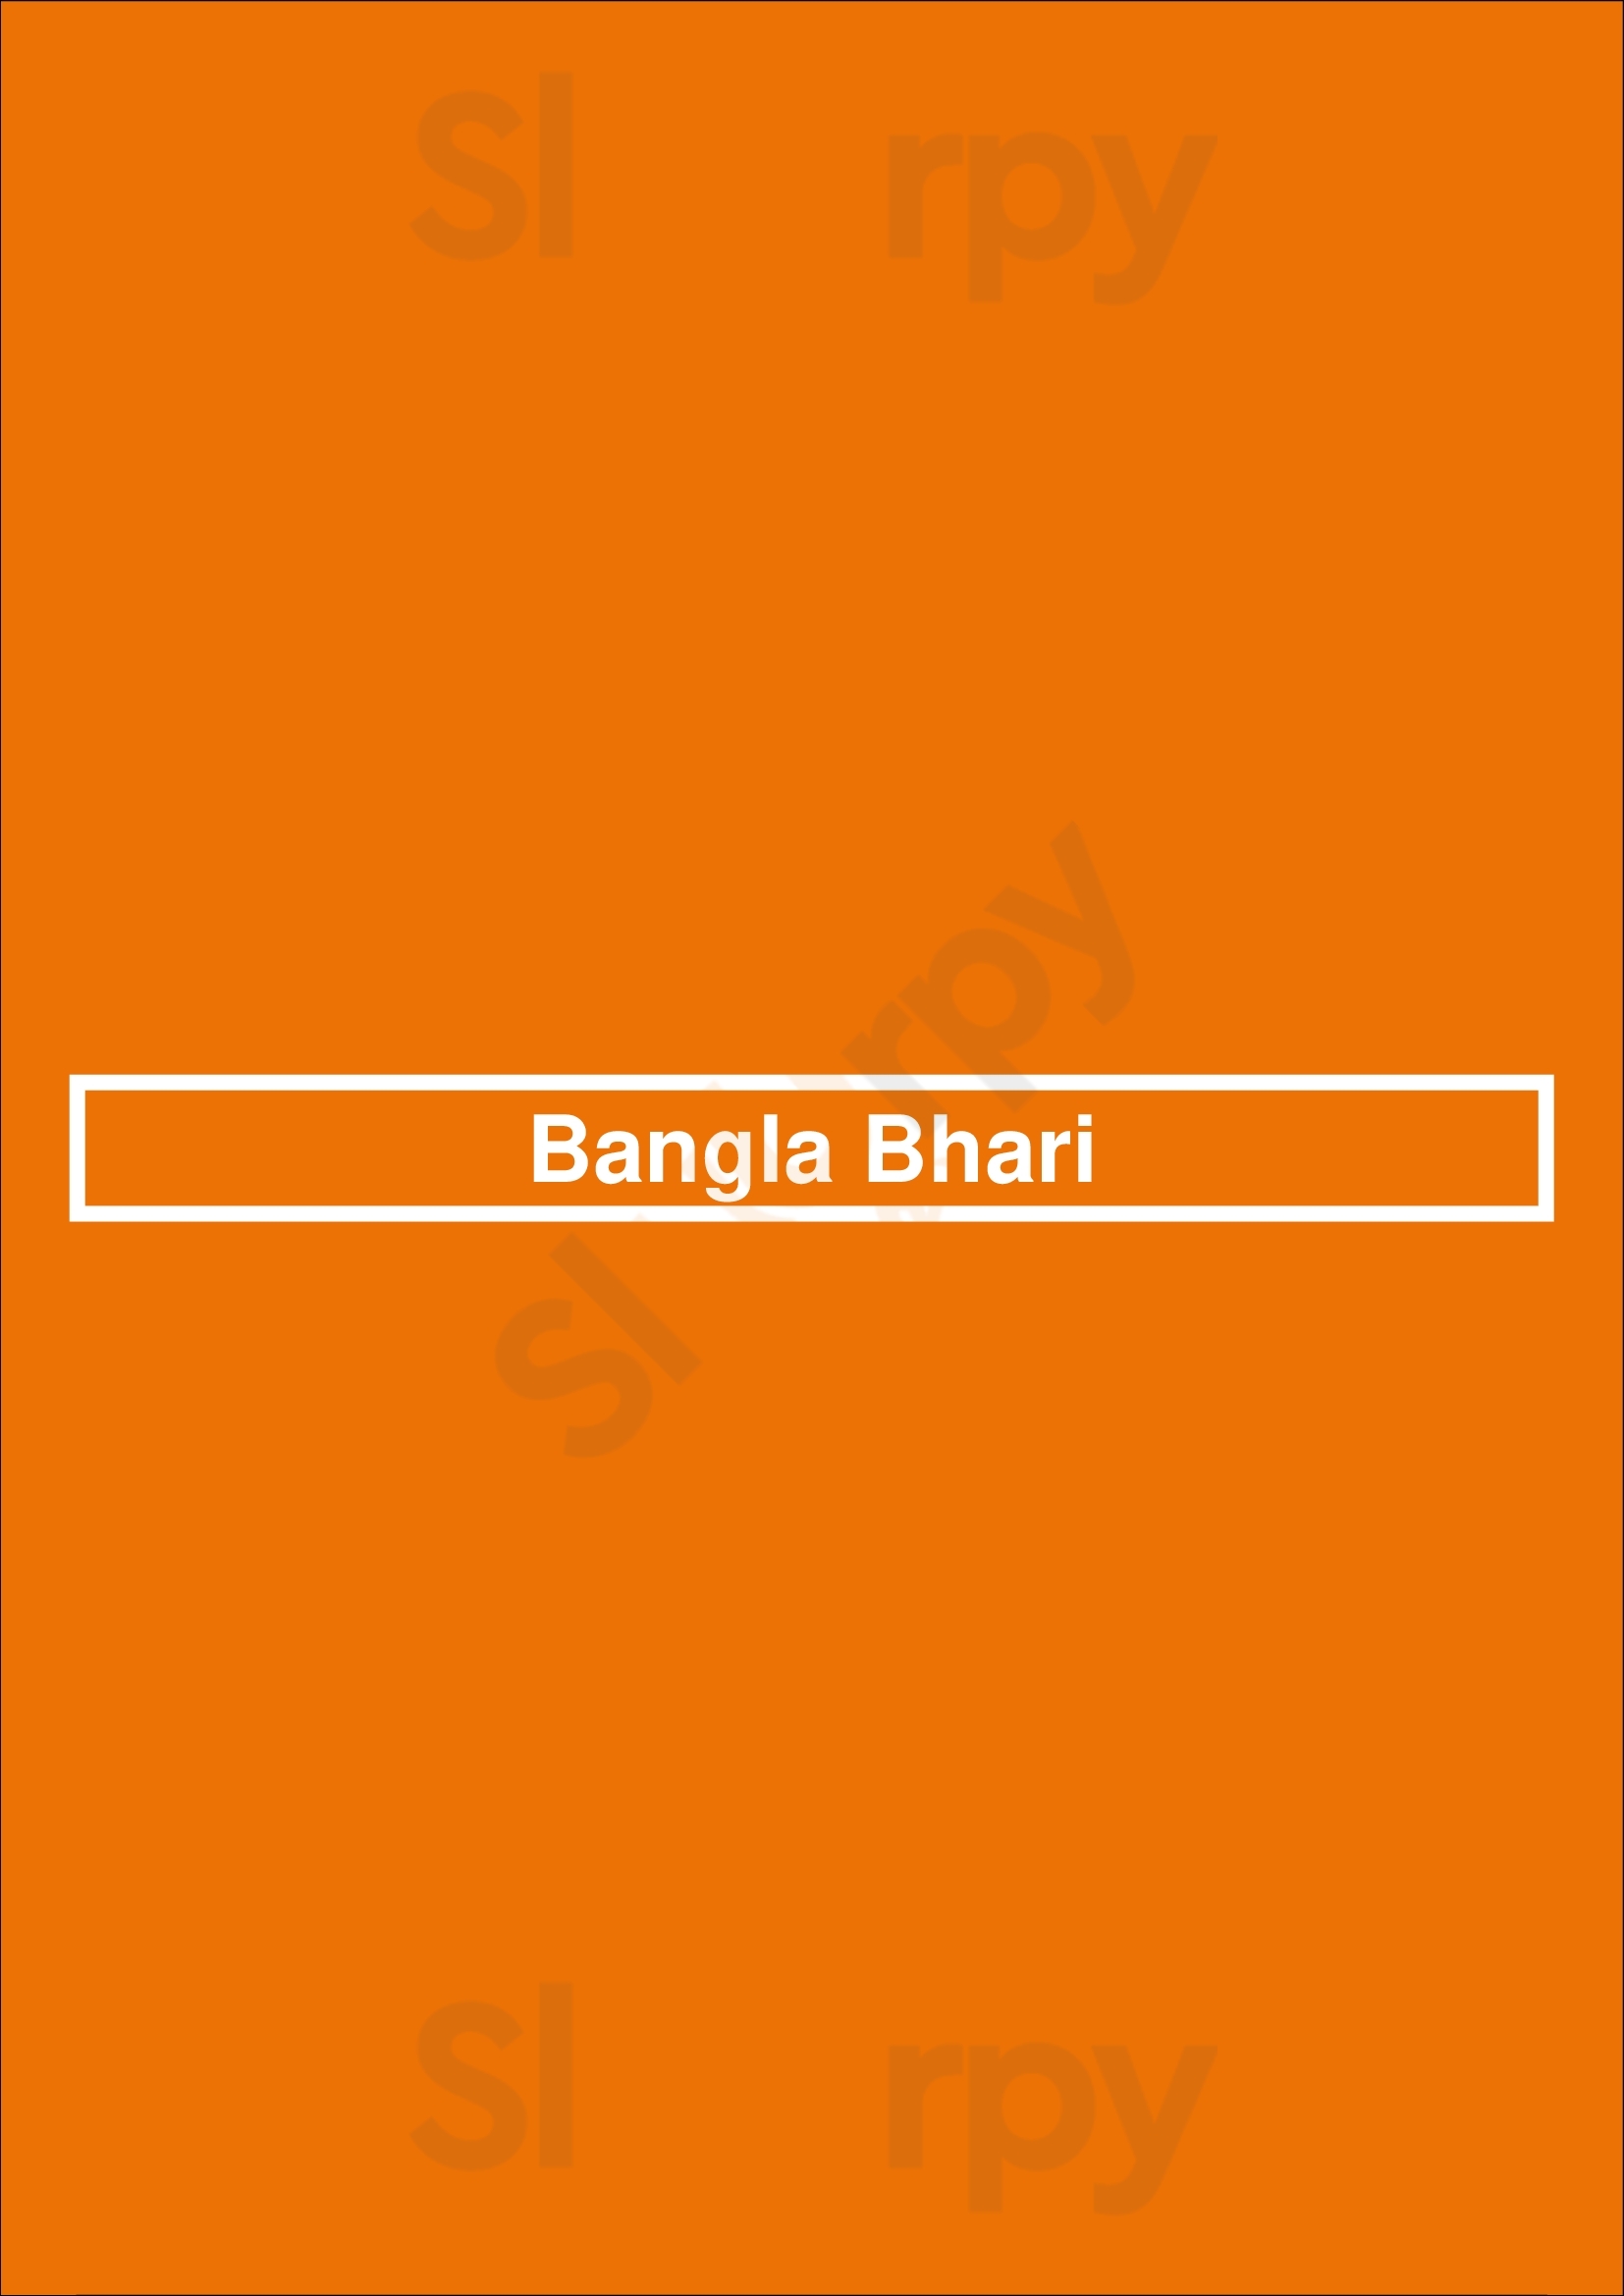 Bangla Bhari Birmingham Menu - 1